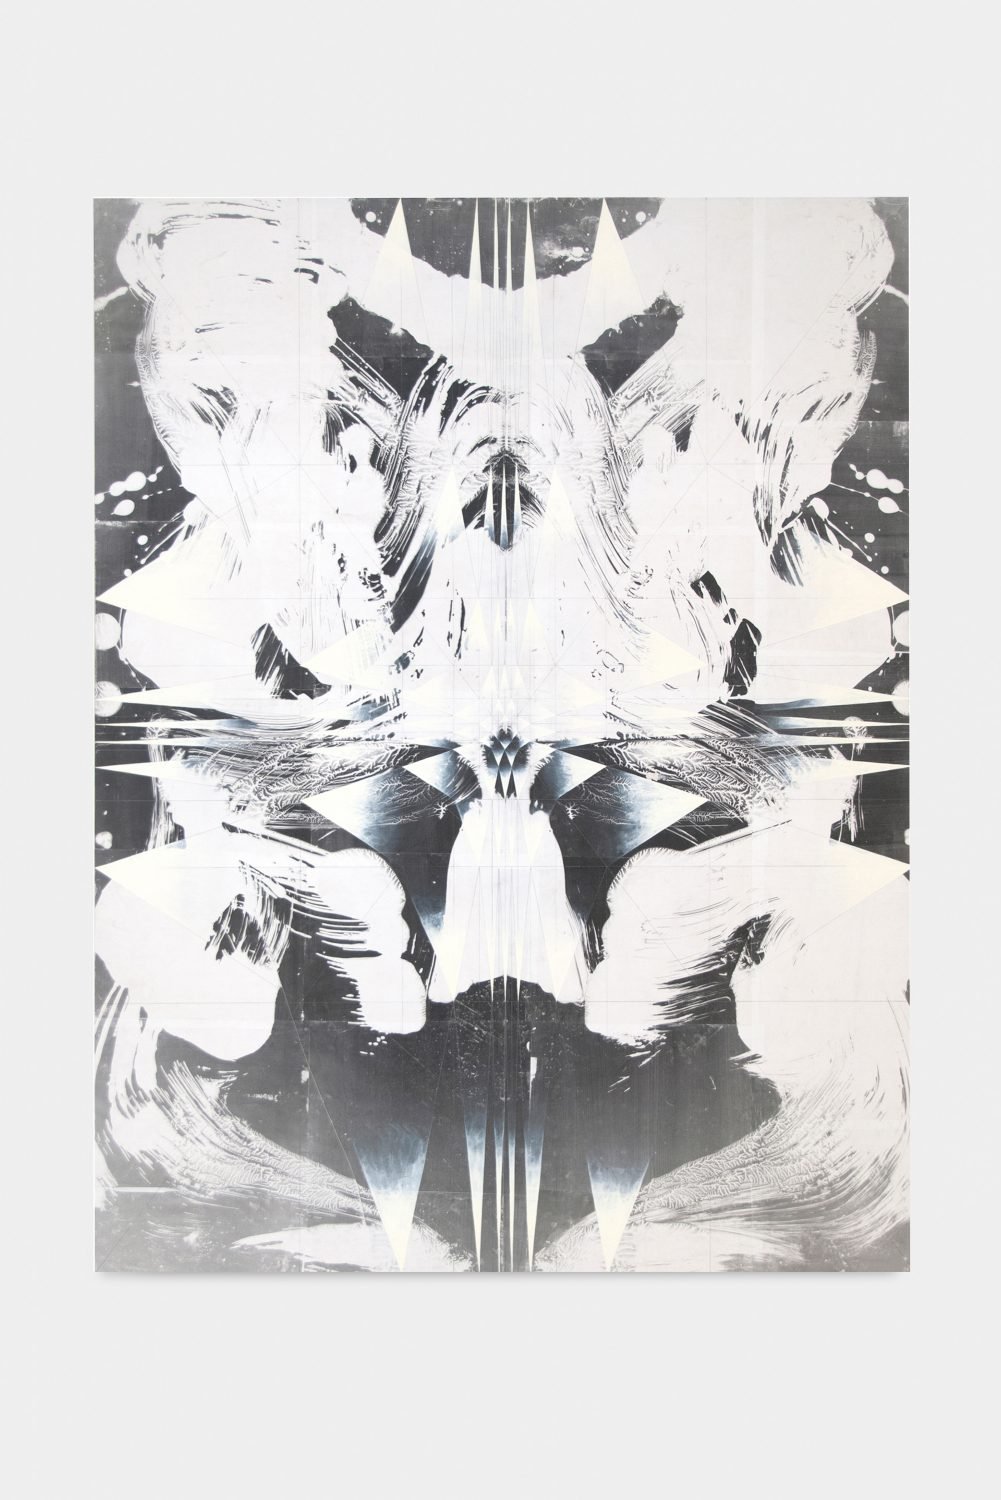 Tillman KaiserUntitled, 2015Silvergelatine, eggtempera and oil on paper on wood180 x 140 cm